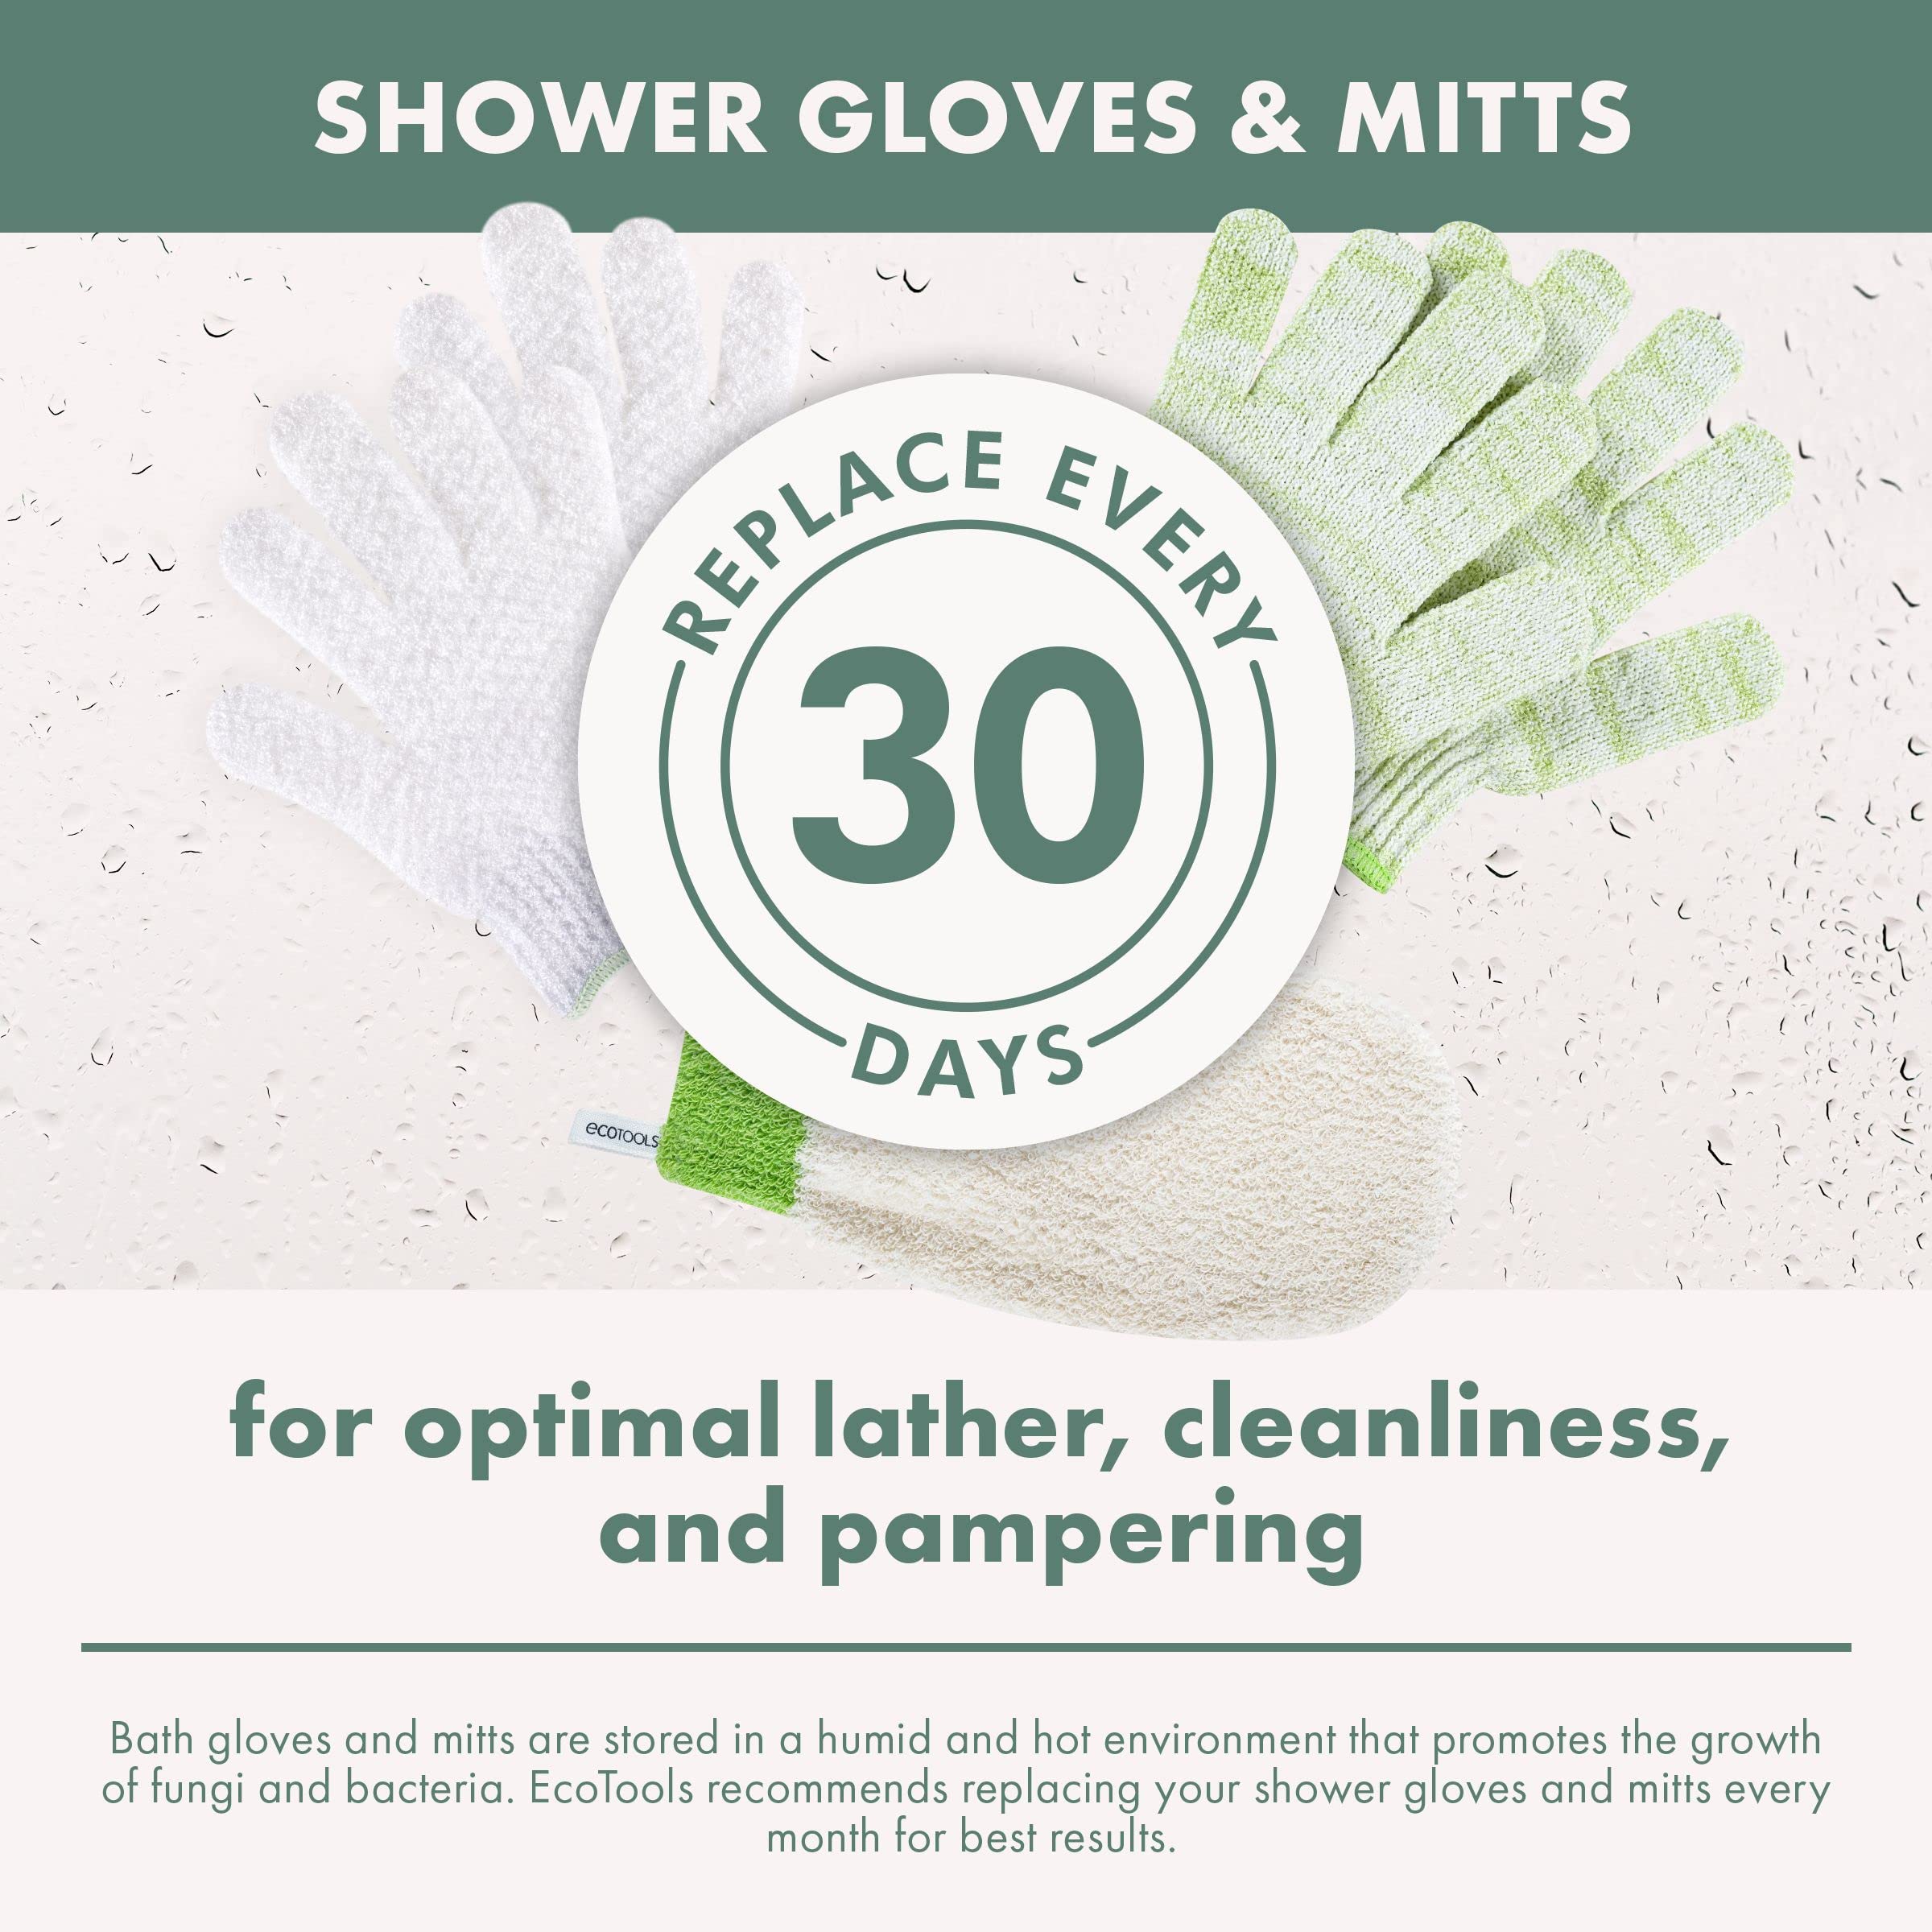 EcoTools Exfoliating Mitt, Cleansing Bath & Shower Glove, Moderate Exfoliation, Self-Tanning Prep, Buff Away Dead Skin & Impurities, Smooth & Streak Free Finish, Elastic Wrist, Sustainable, 6 Count